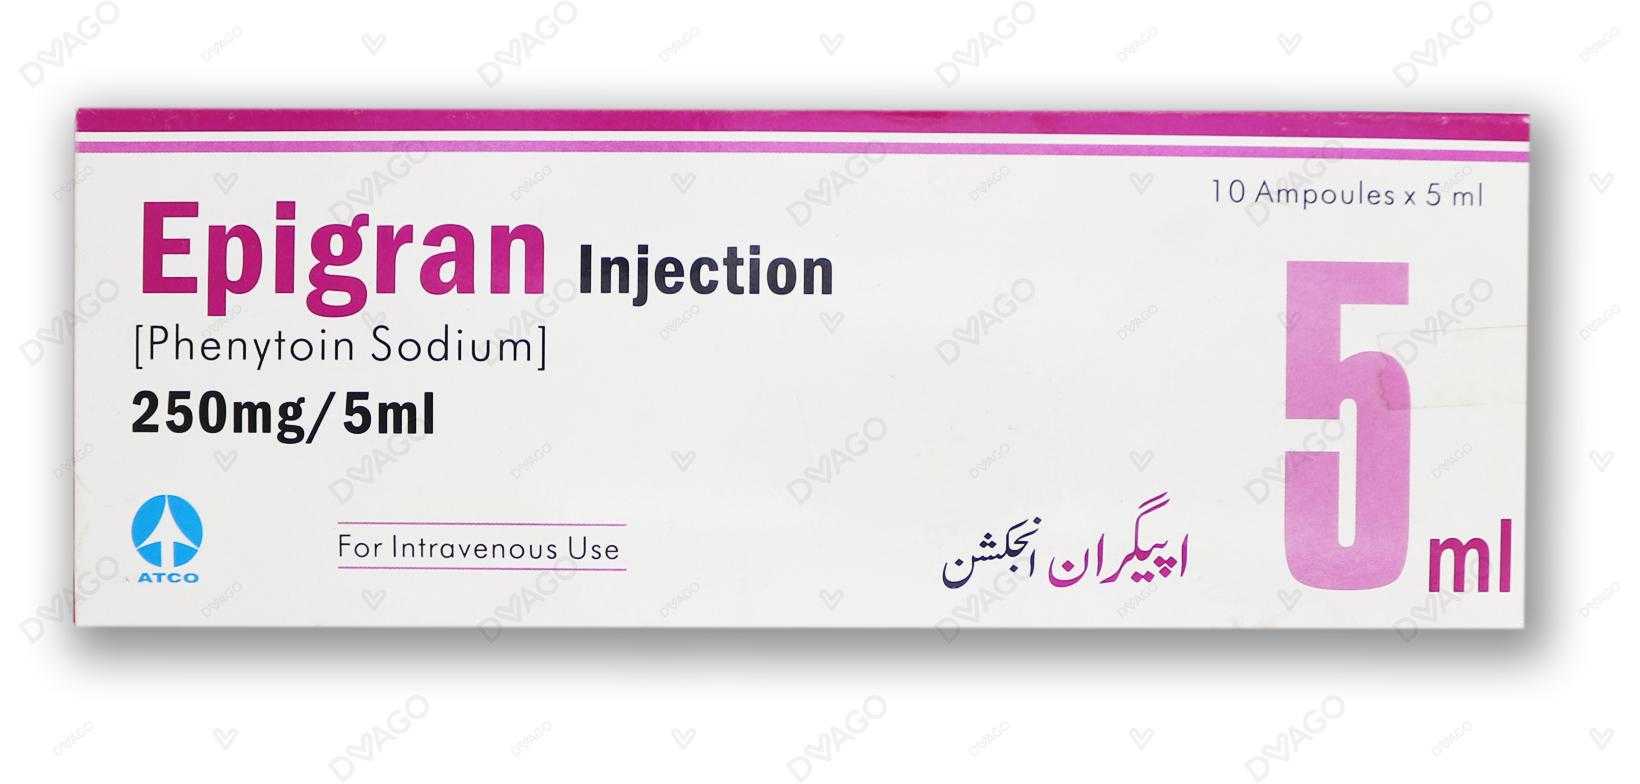 epigran iv injection 250mg/5ml